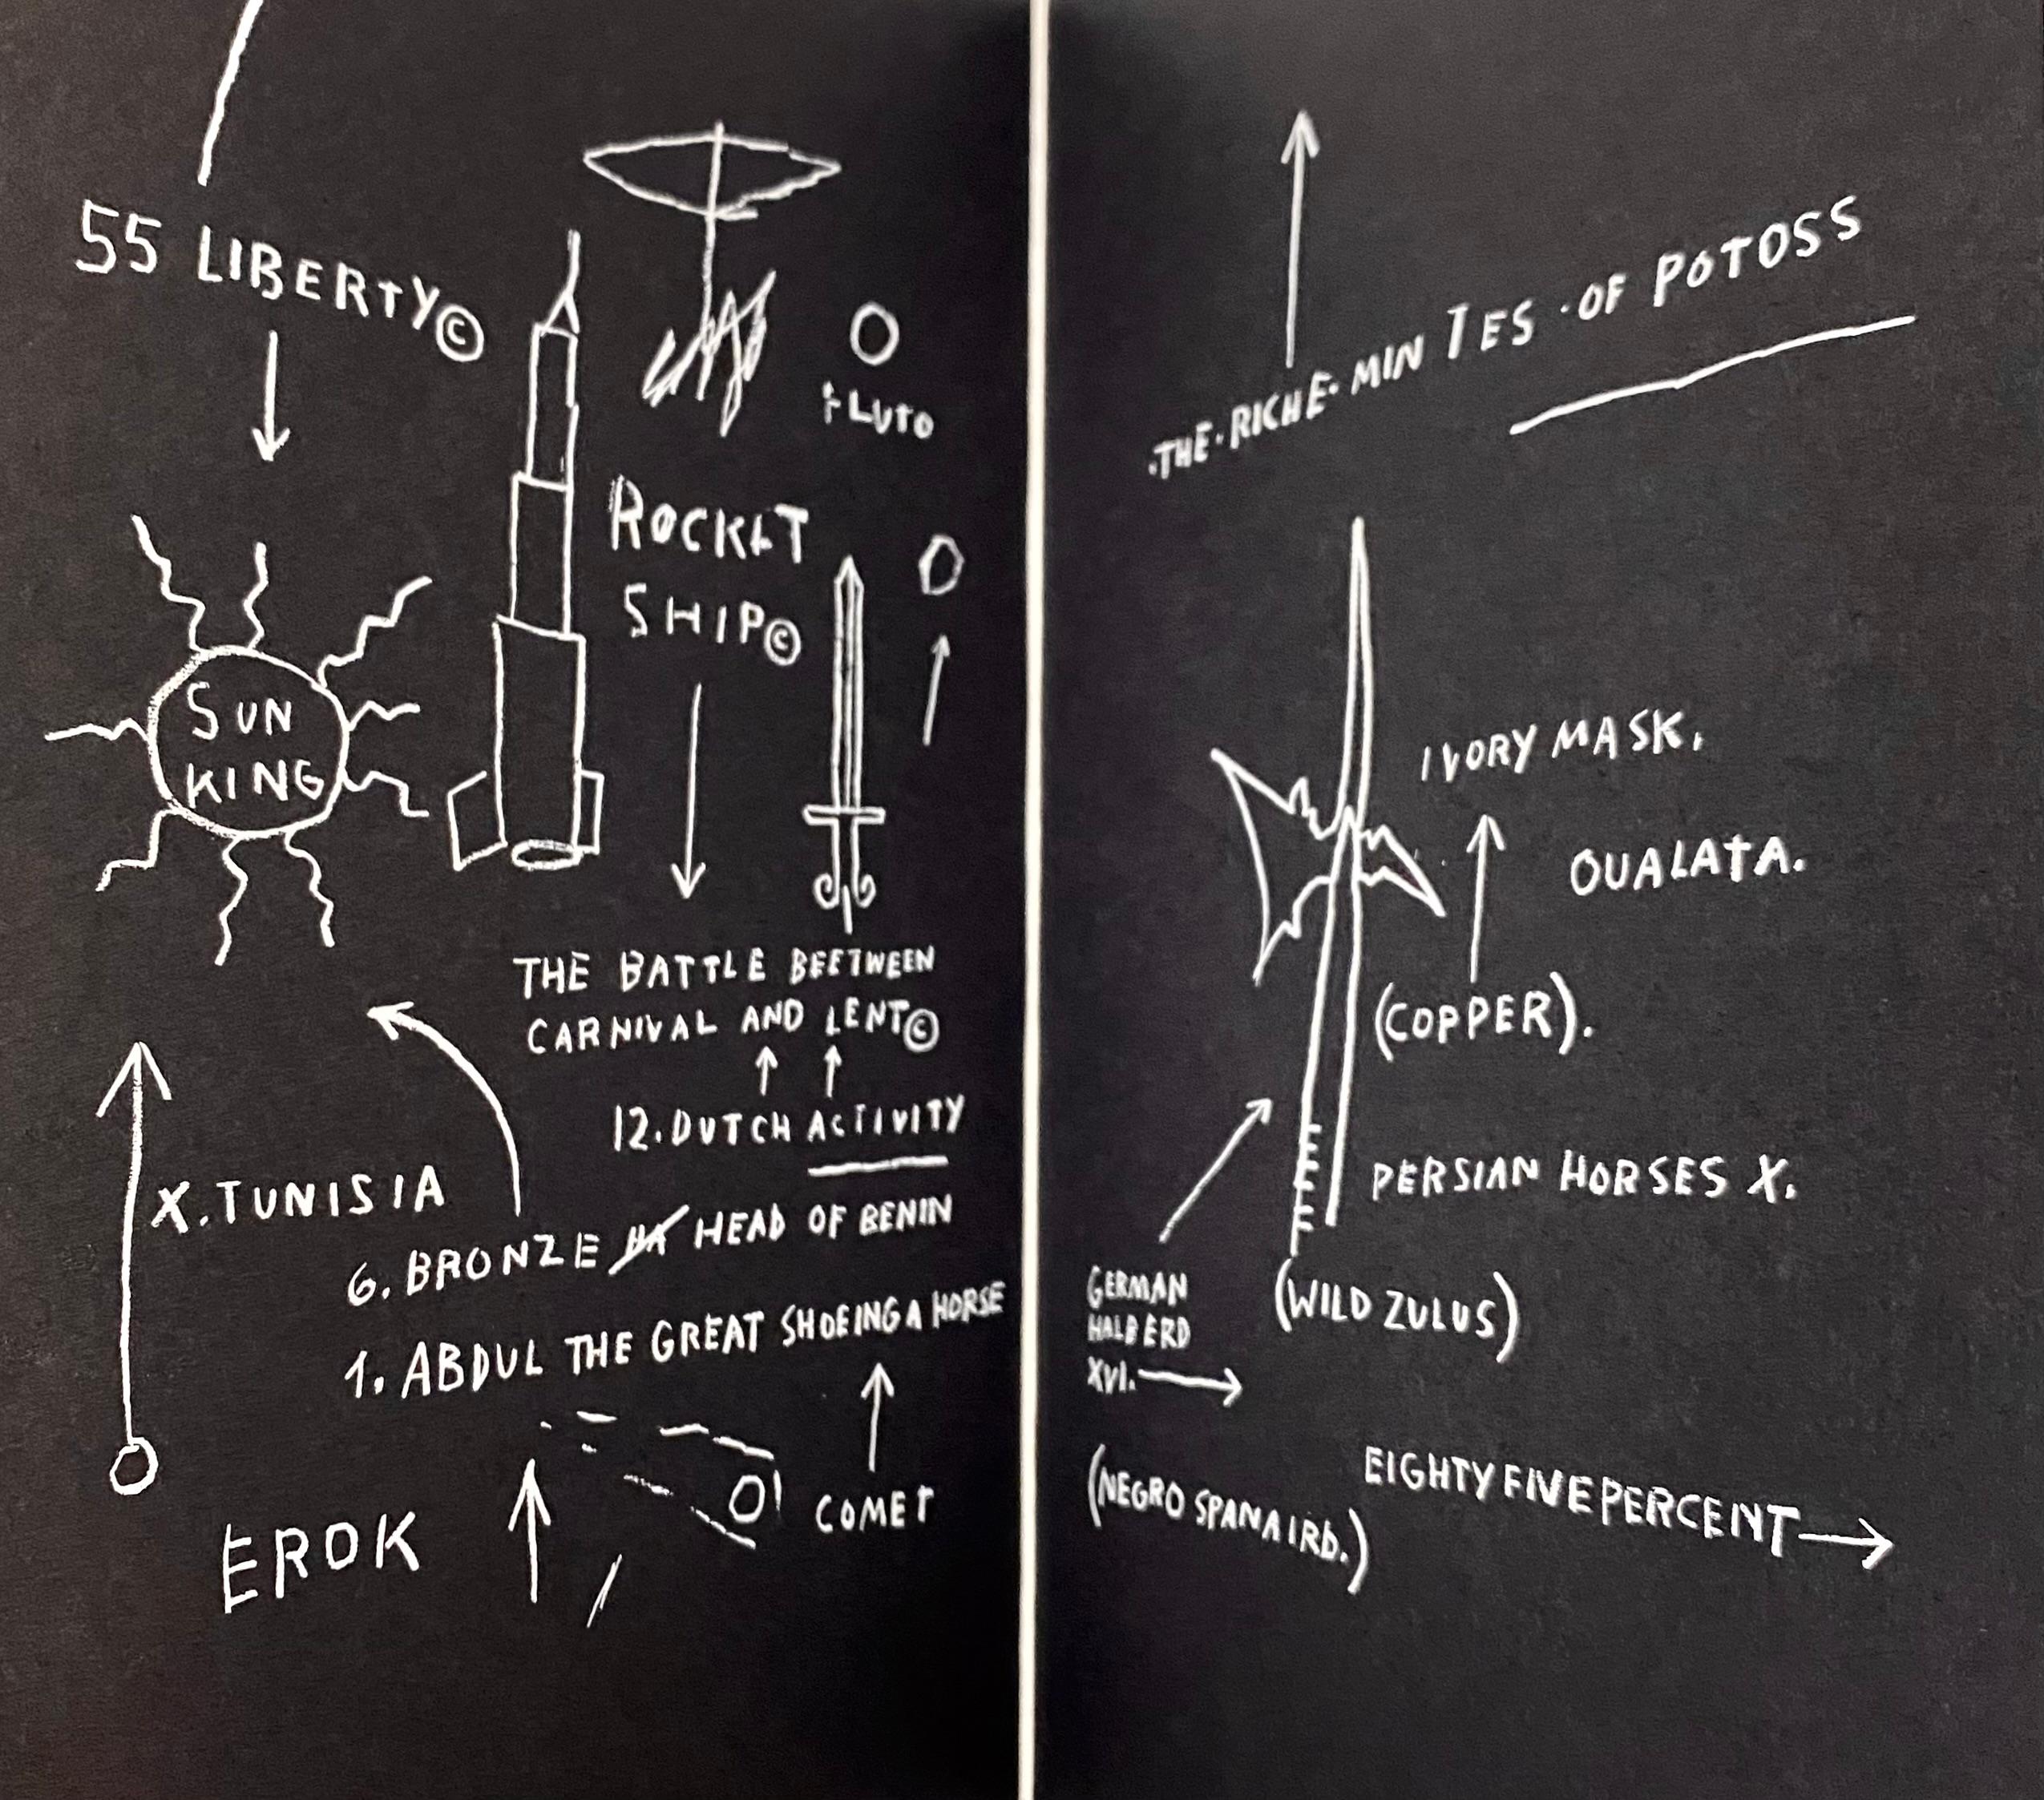 Jean-Michel Basquiat The Paris Review:
1982 The Paris Review book, featuring an interior spread of Jean-Michel Basquiat's 